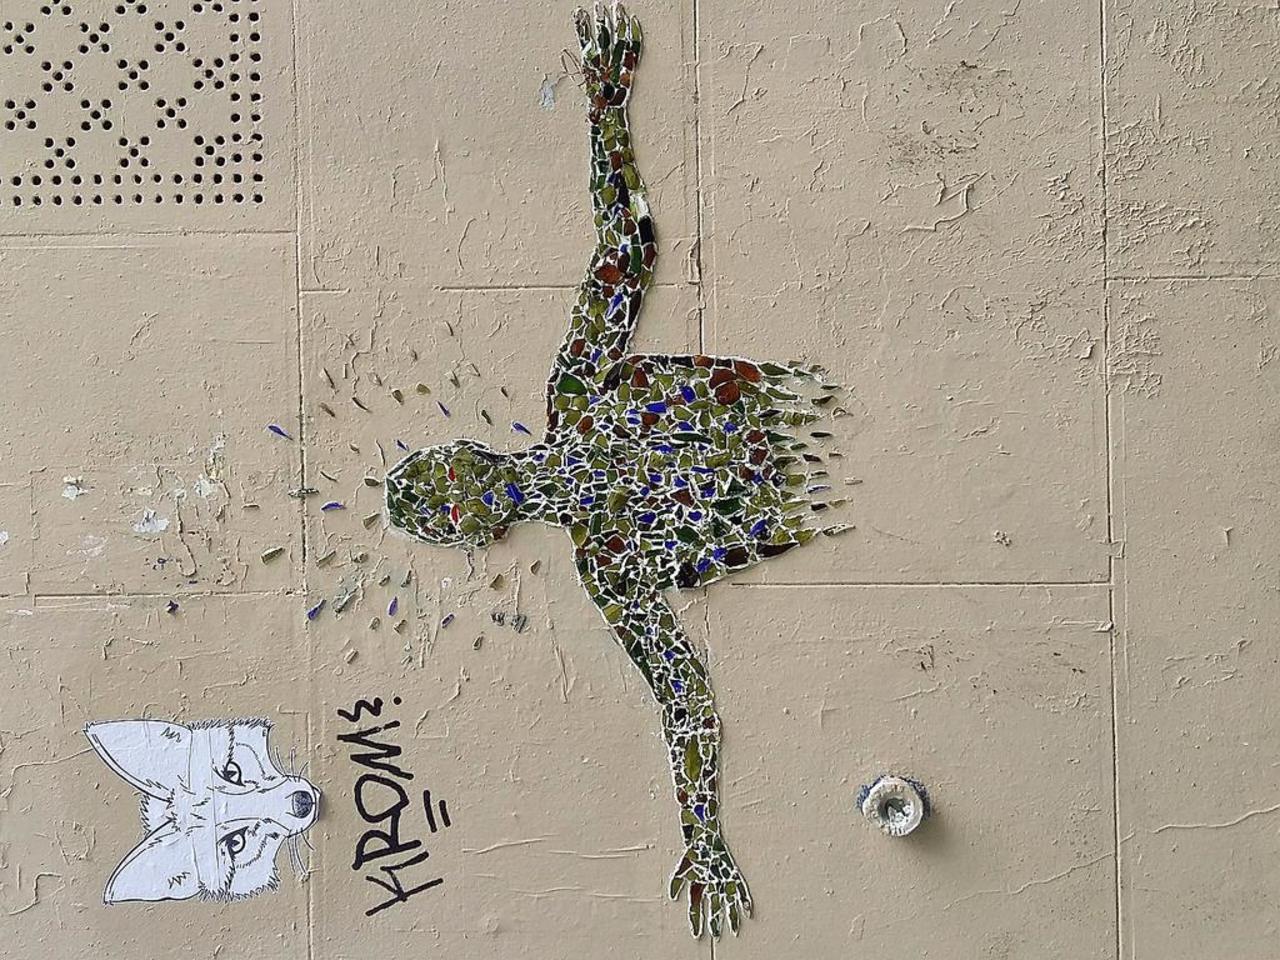 RT @urbacolors: Street Art by #shatters in #Paris http://www.urbacolors.com #art #mural #graffiti #streetart http://t.co/3nkWurzrrV